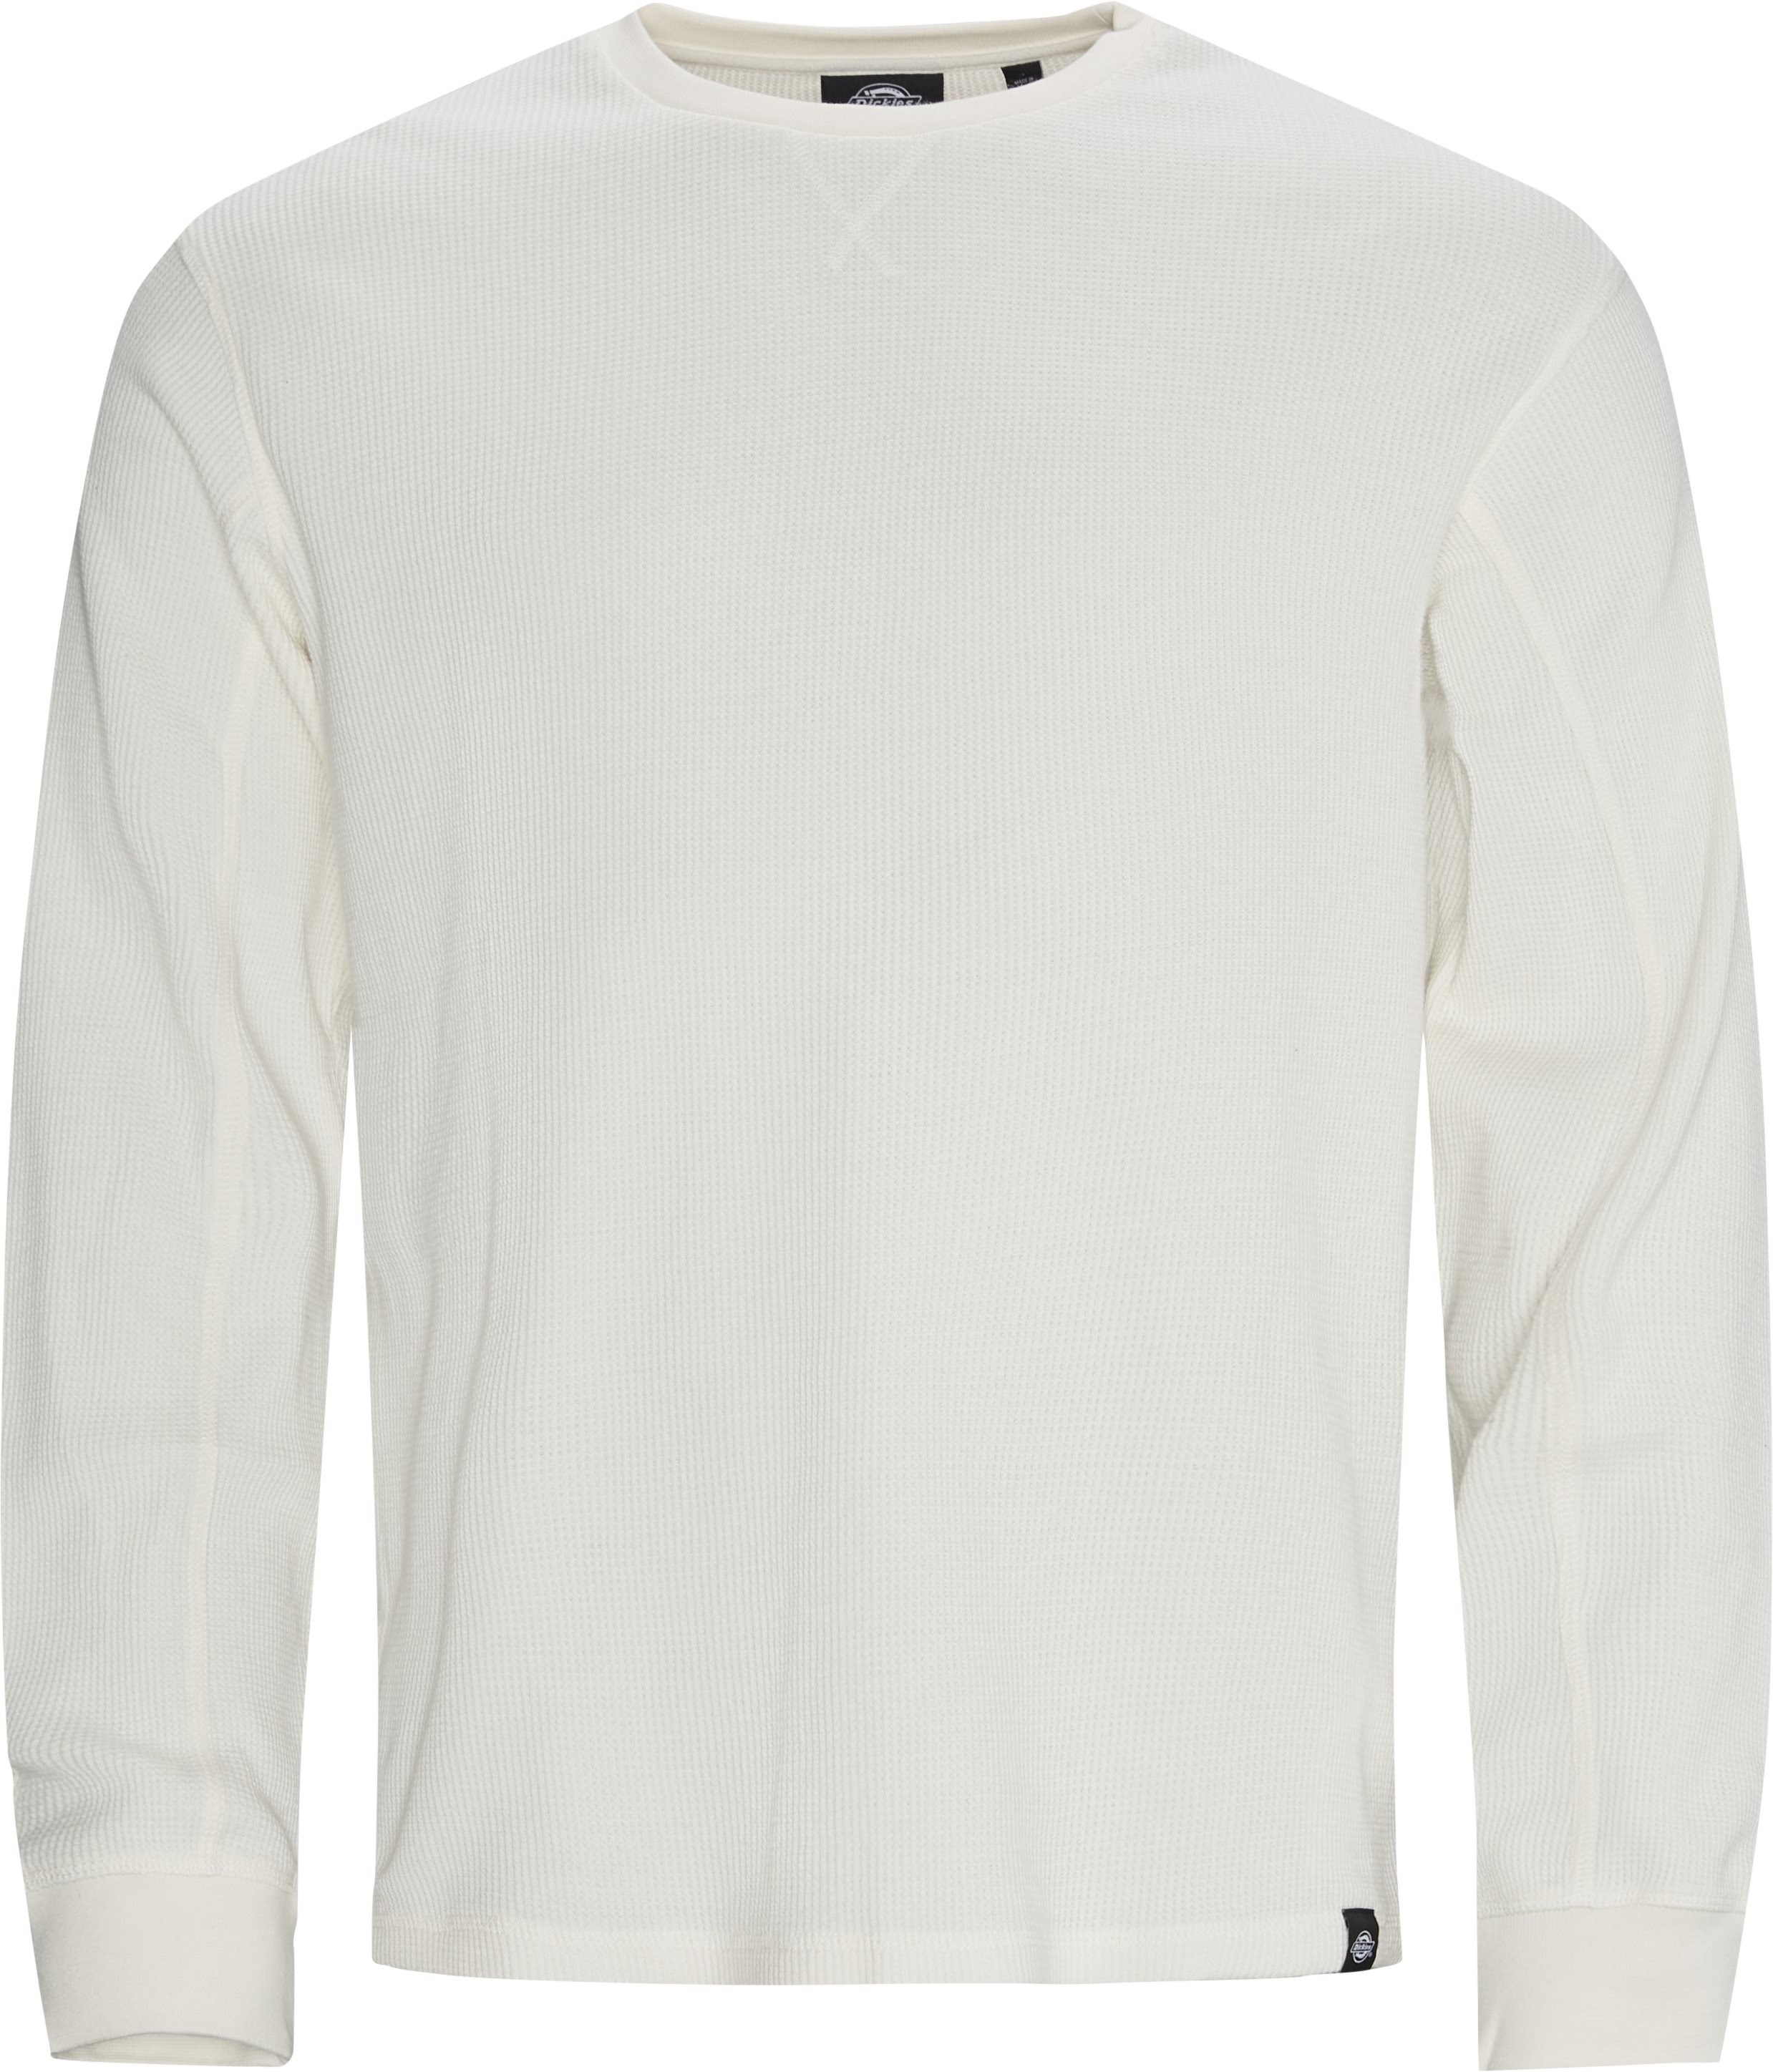 Szwolle LS Tee - T-shirts - Regular fit - White